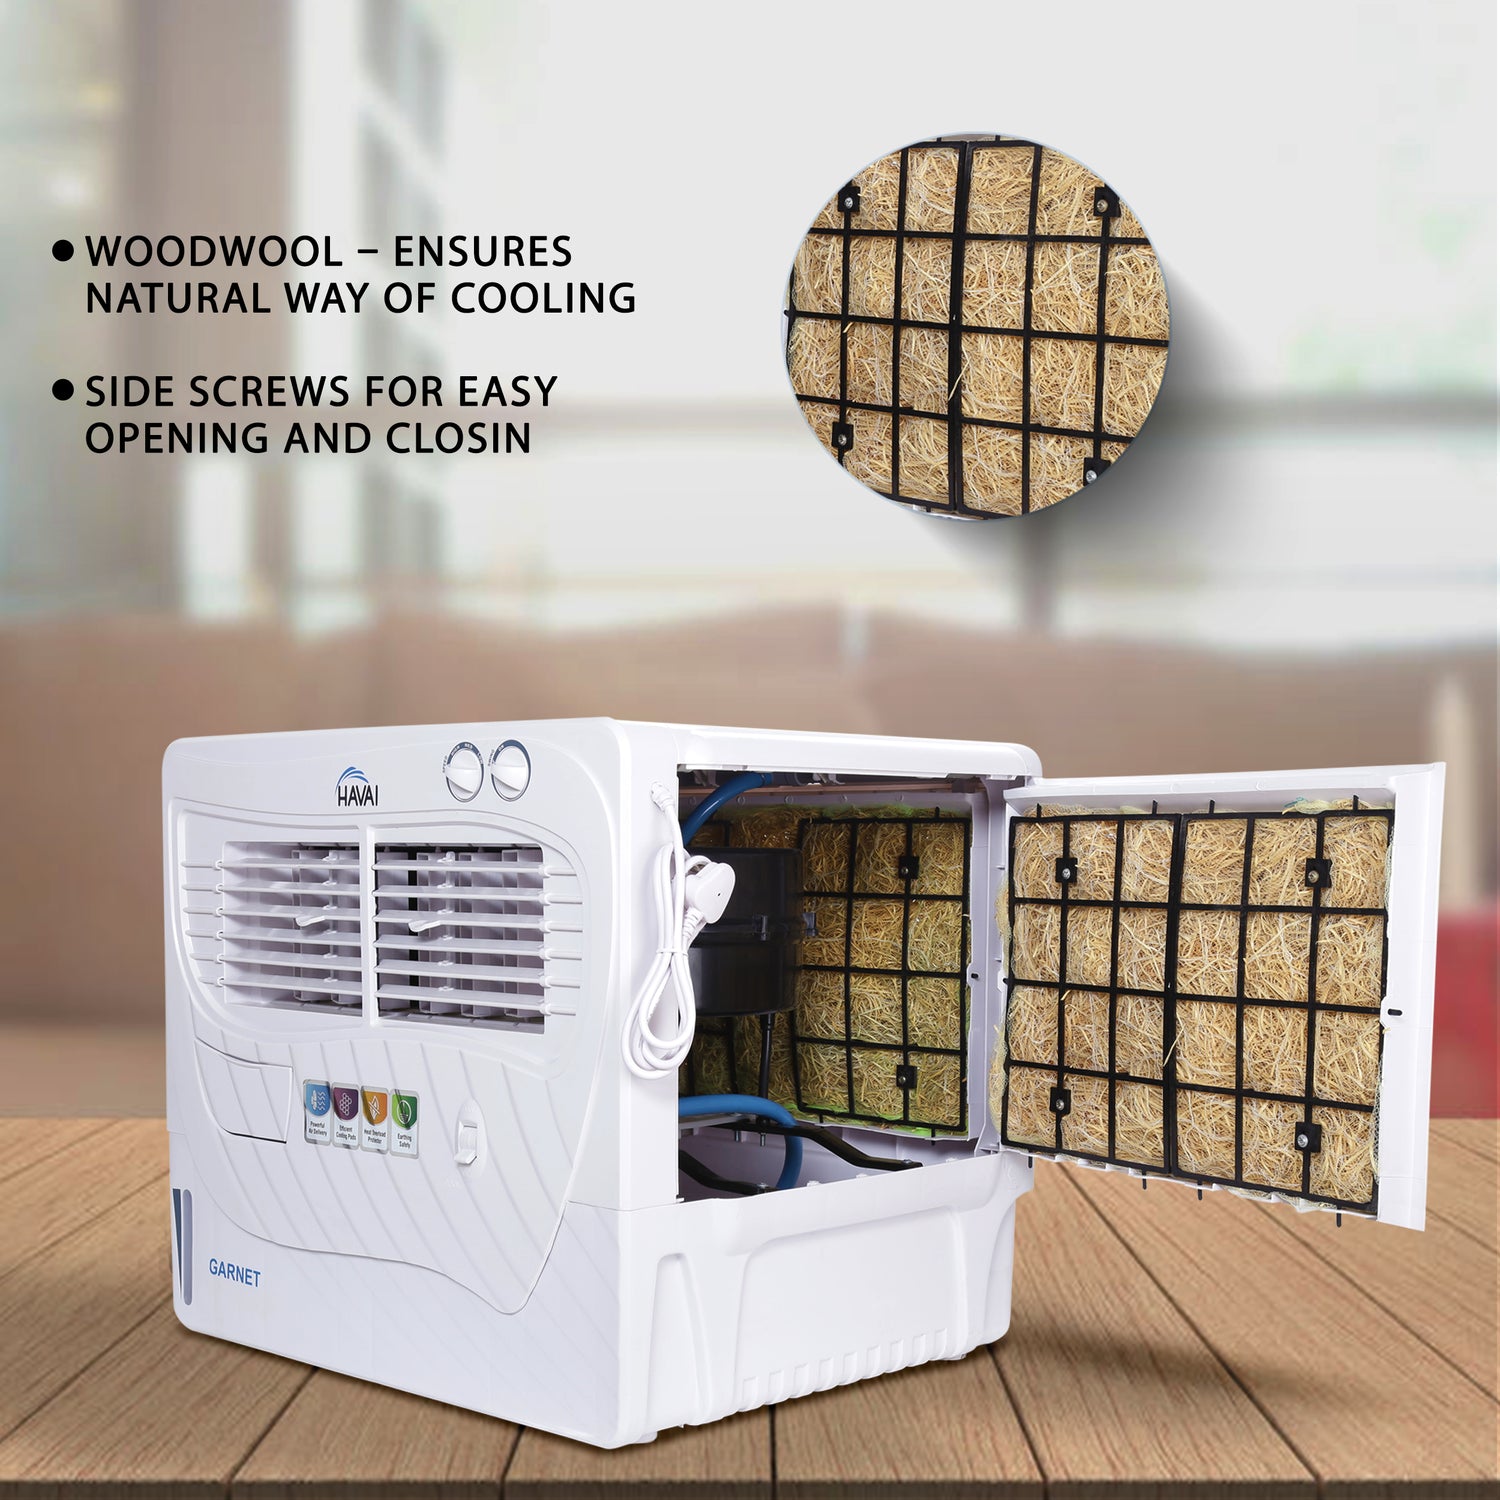 HAVAI Garnet Window Cooler with Powerful Blower - 50 L, Woodwool